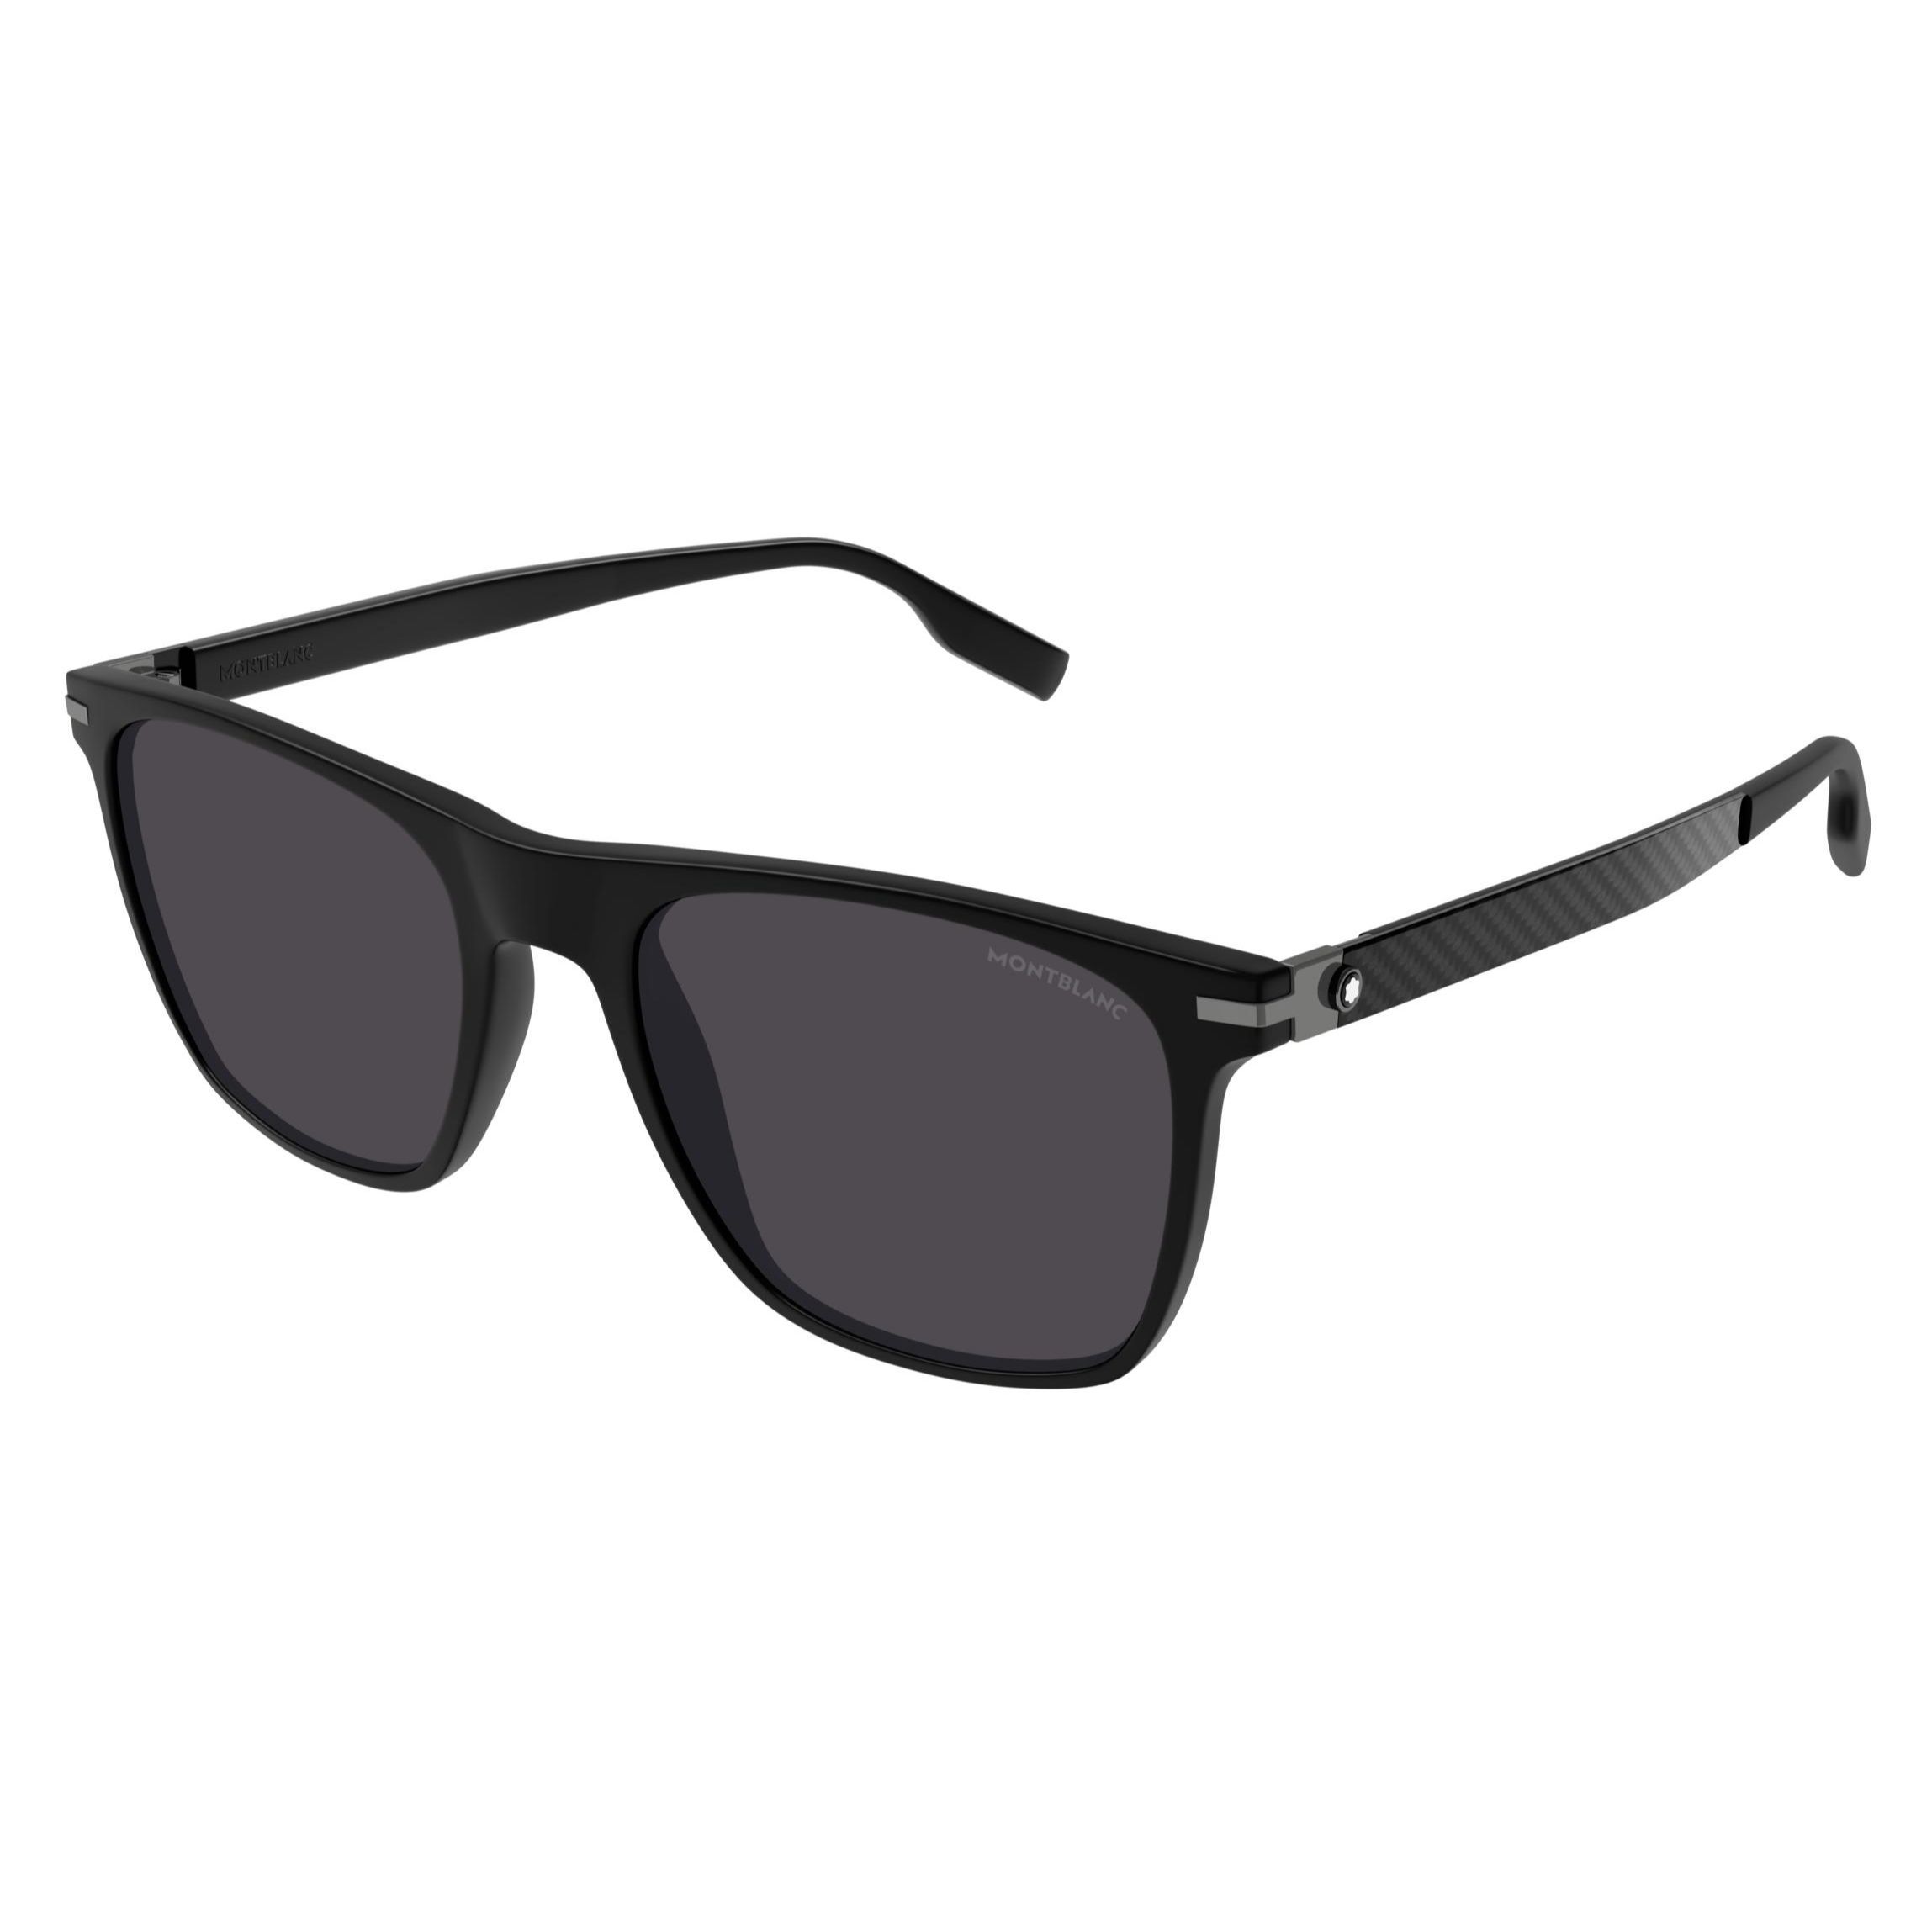 MB0248S Square Sunglasses 001 - size 55